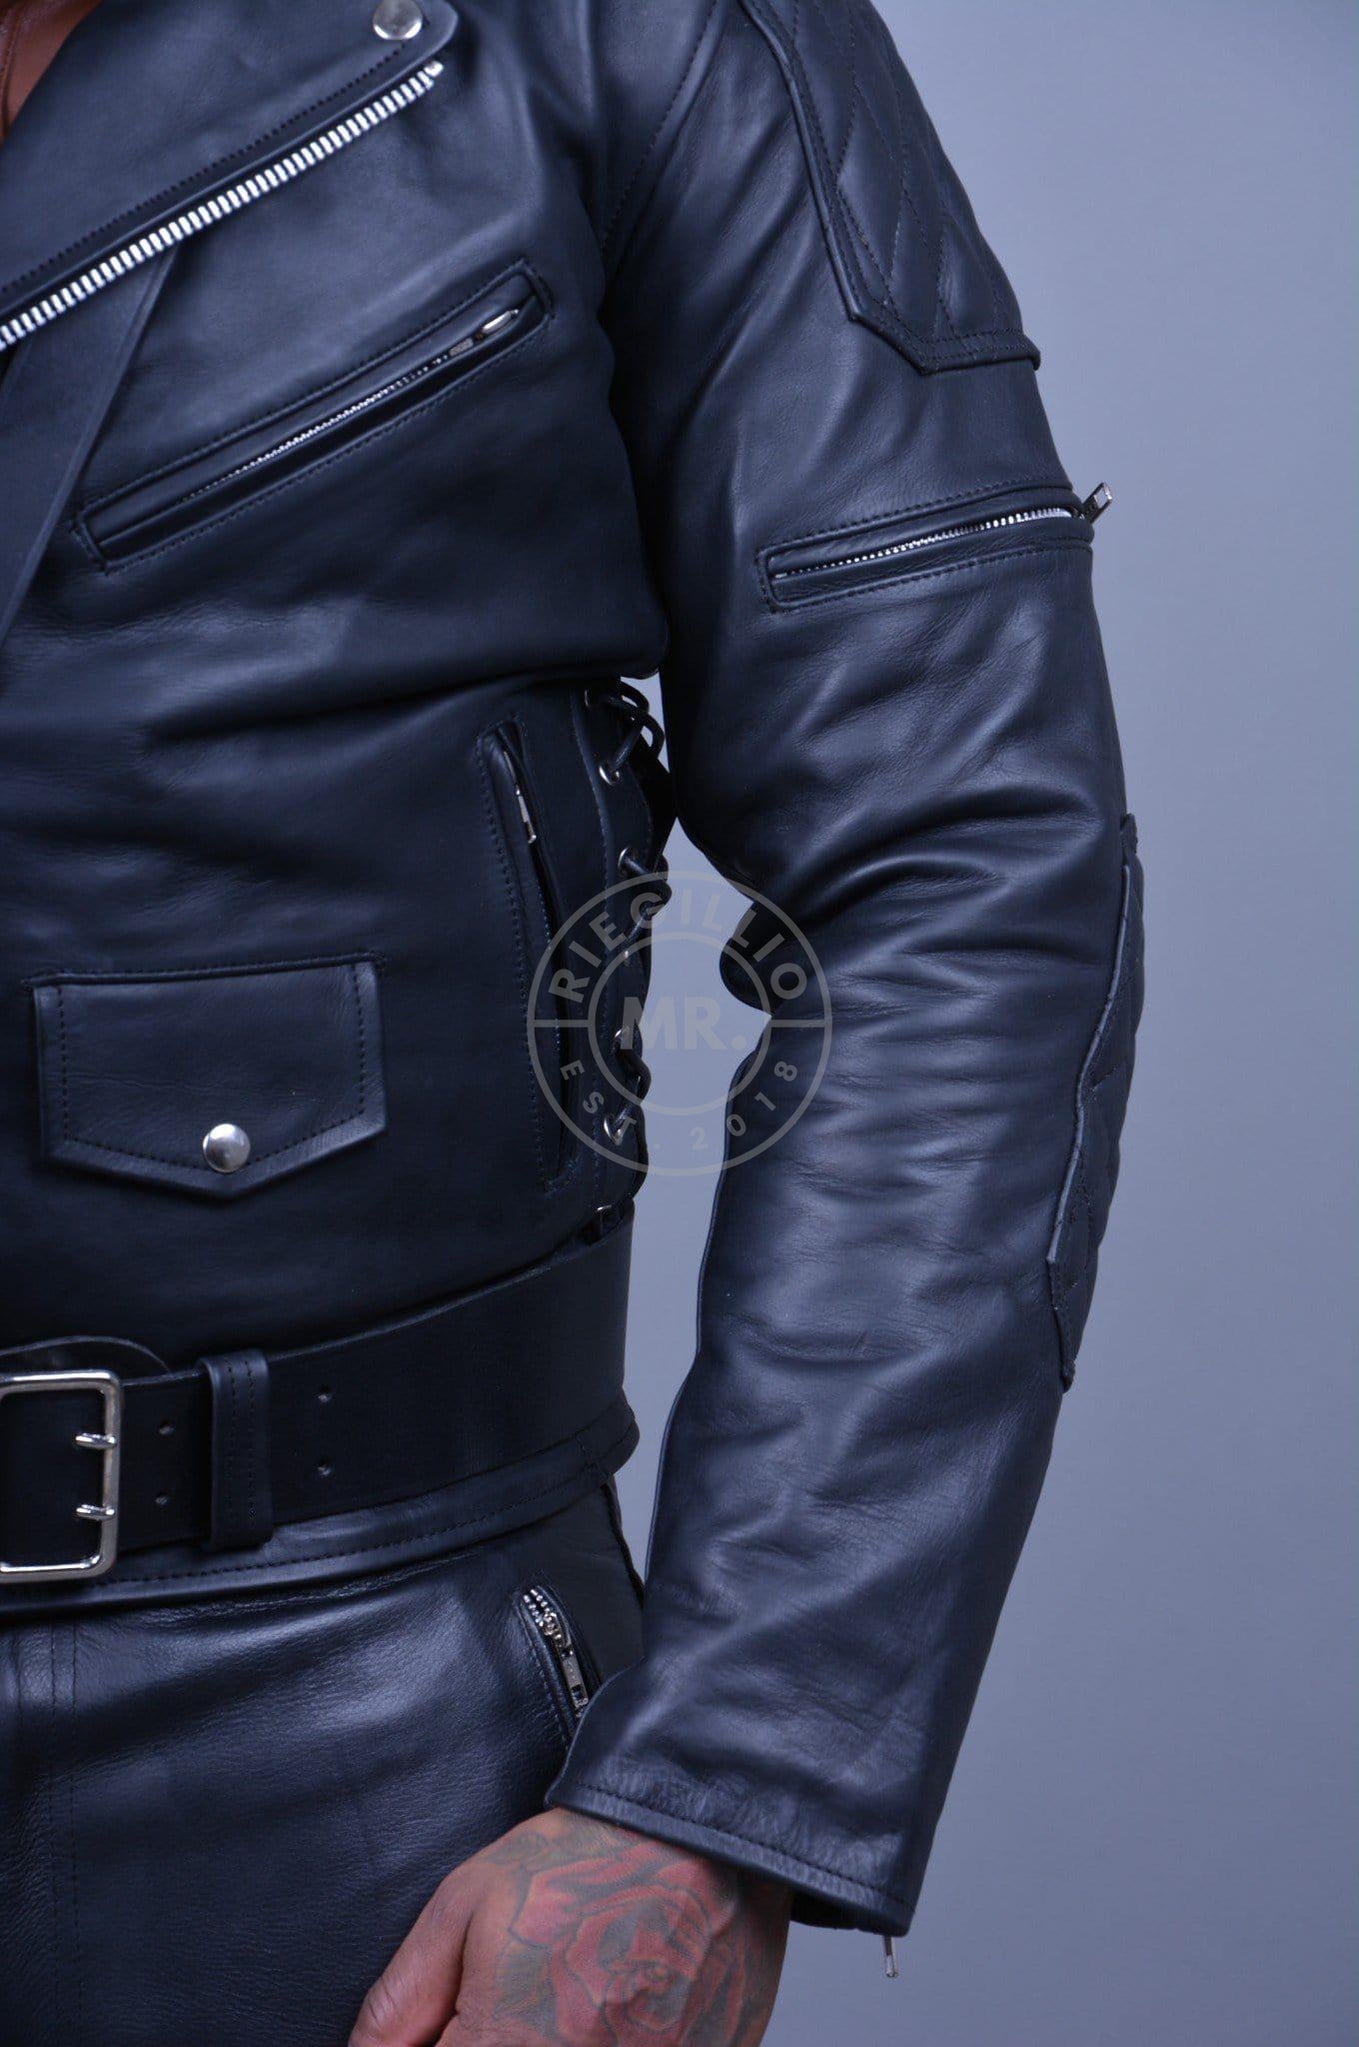 Leather Uniform Jacket at MR. Riegillio